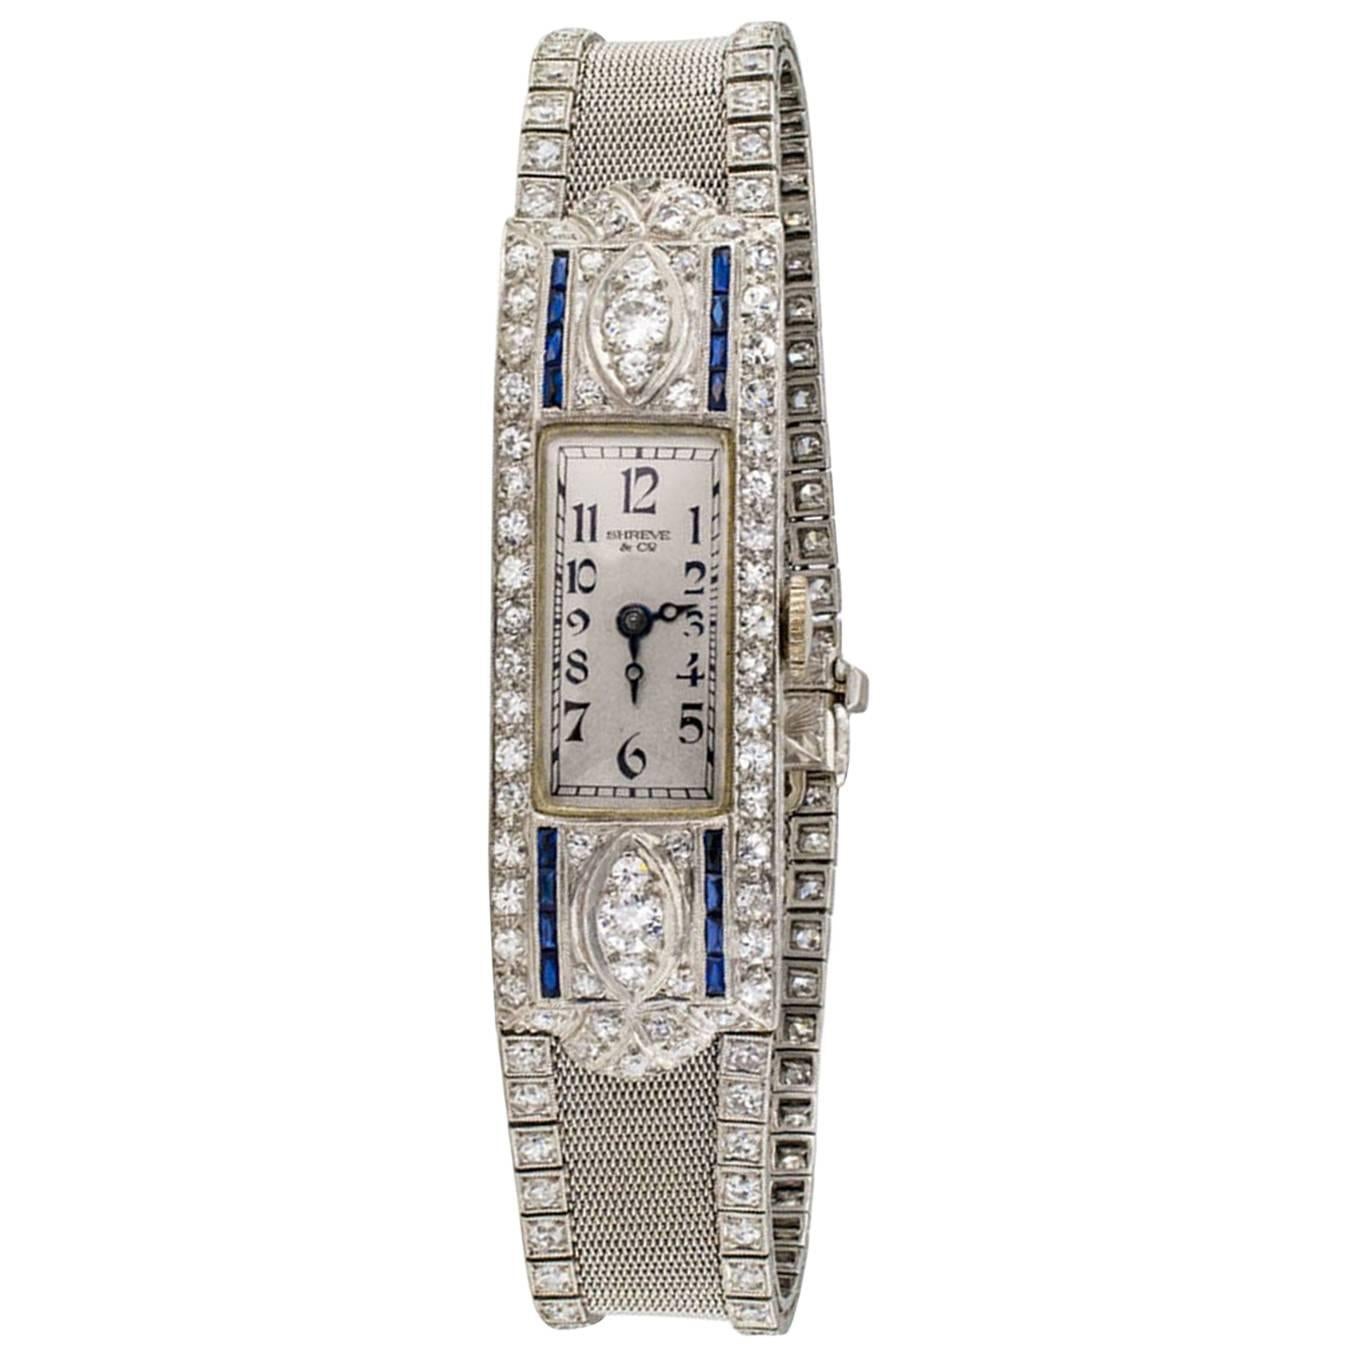 Shreve & Co. Ladies Platinum Diamond Wristwatch